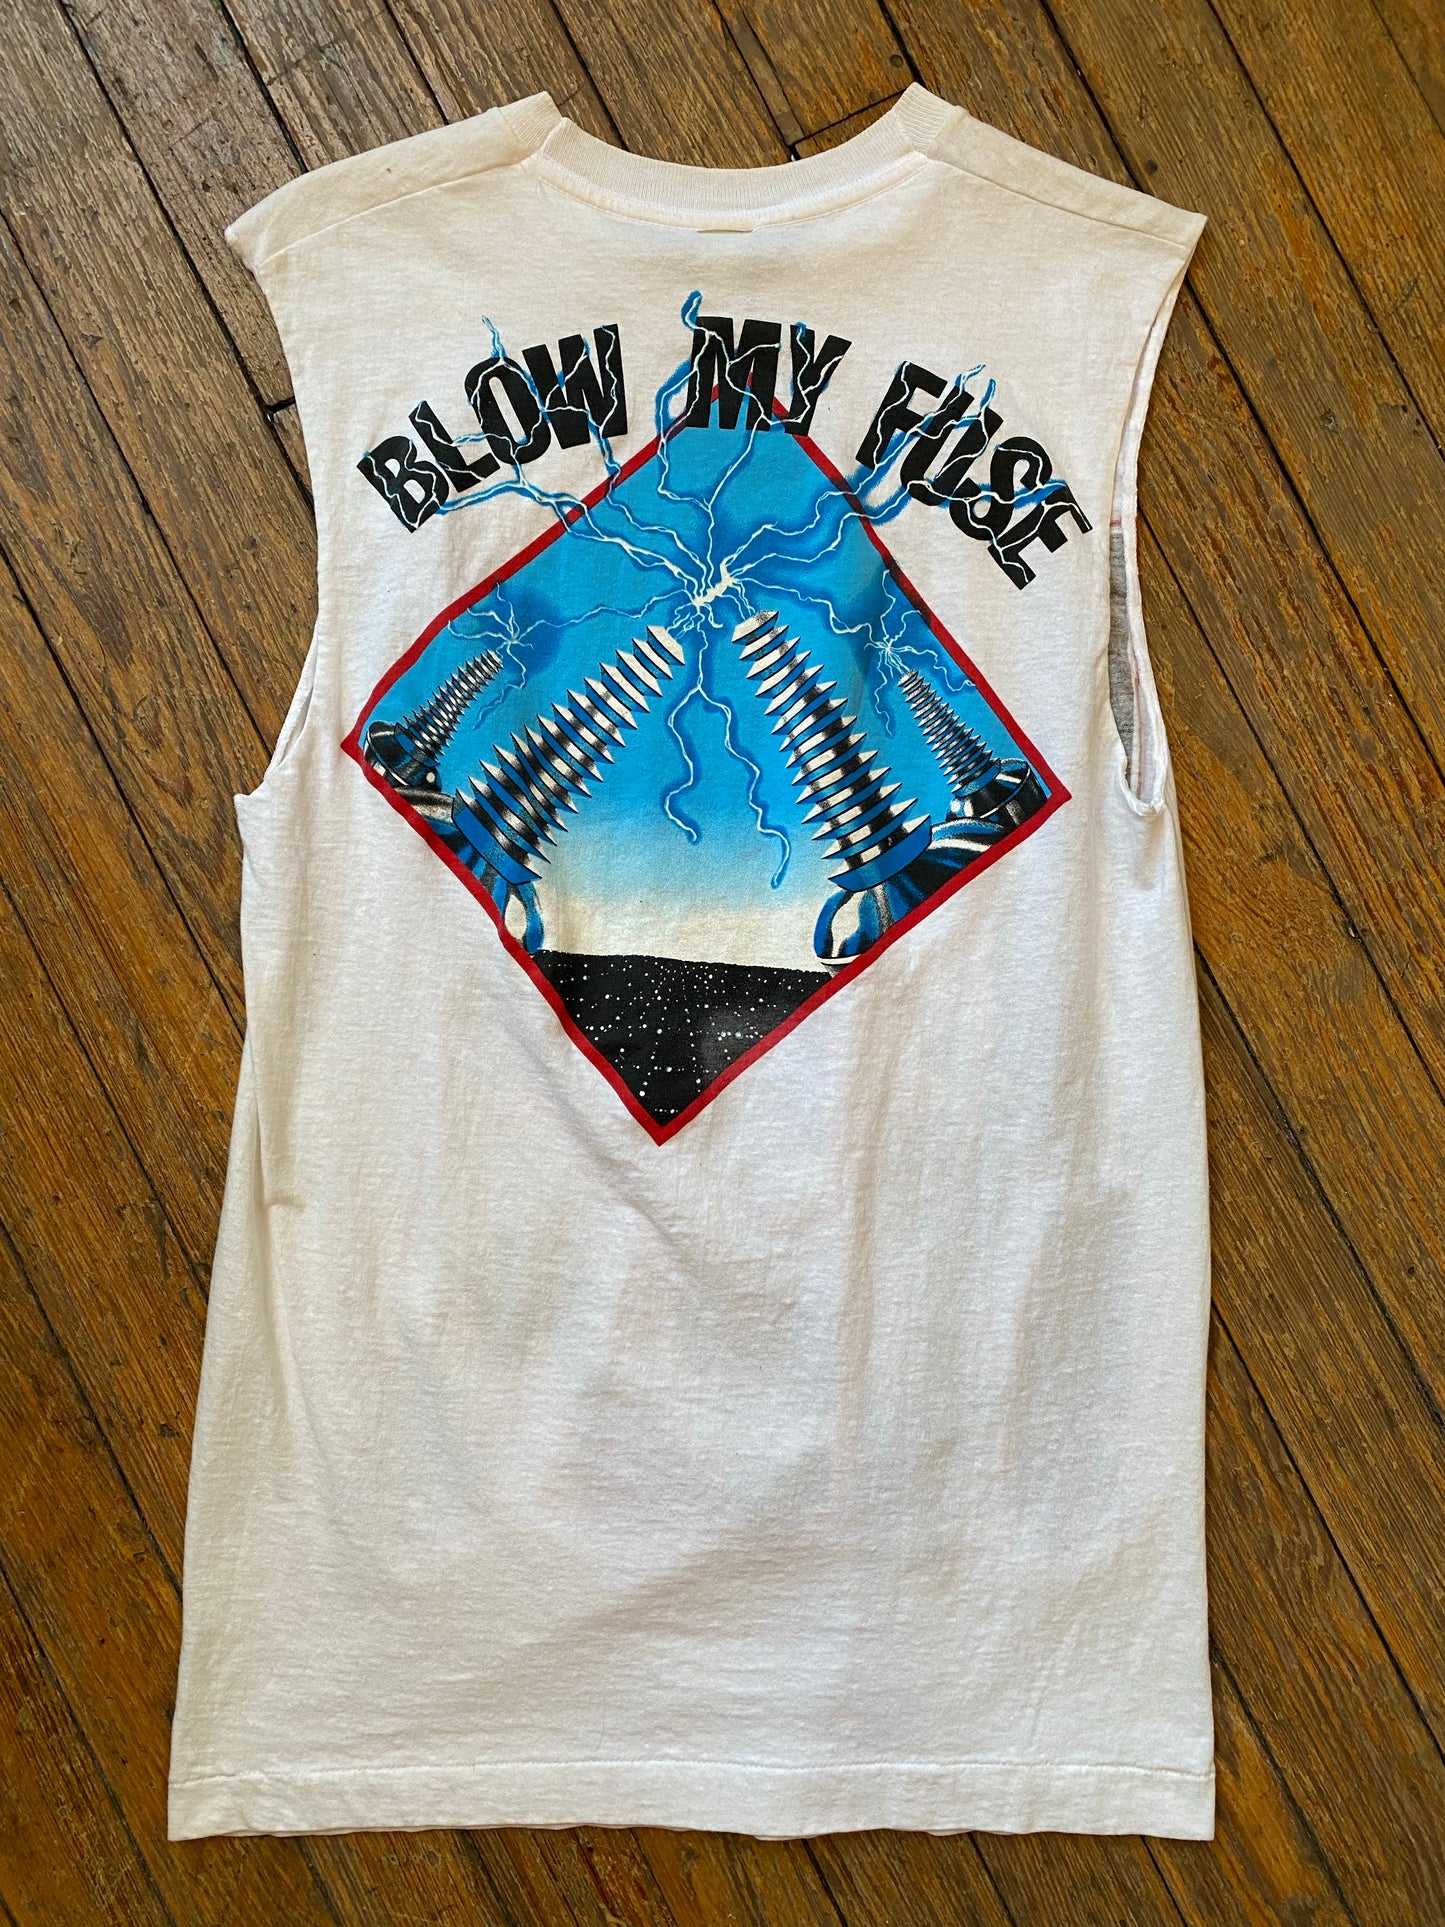 Vintage 1989 KIX Blow My Fuse Cutoff T-Shirt